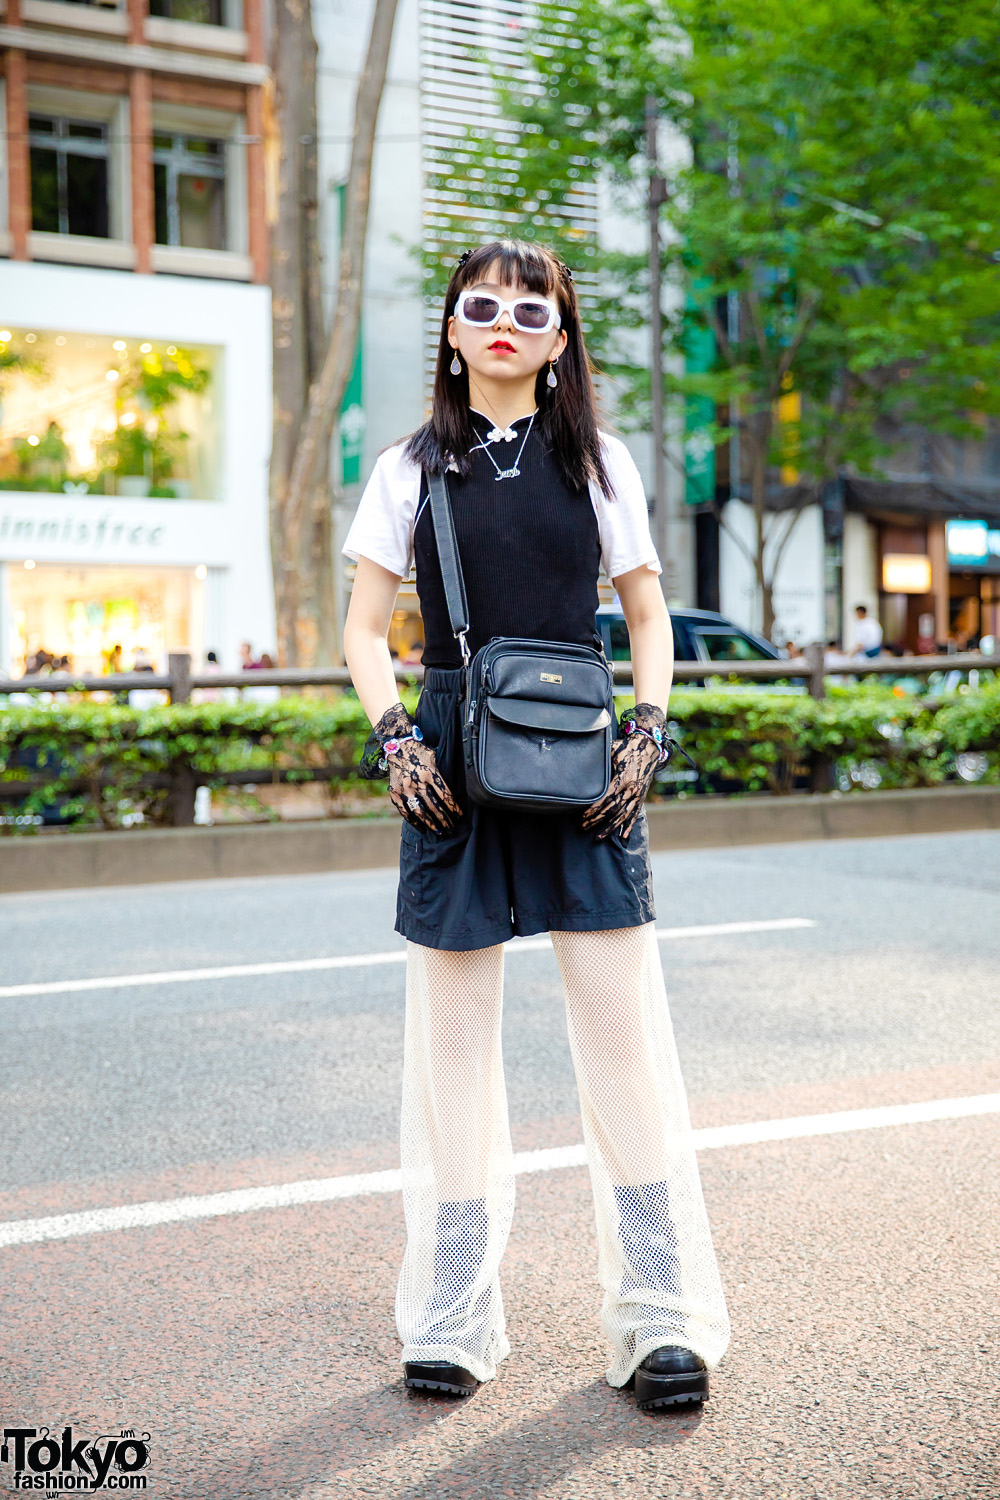 Japanese Layered Monochrome Street Style w/ Forever21 Shirt, Net Pants, Yosuke Boots, Ultimate Label Crossbody Bag & Lace Gloves